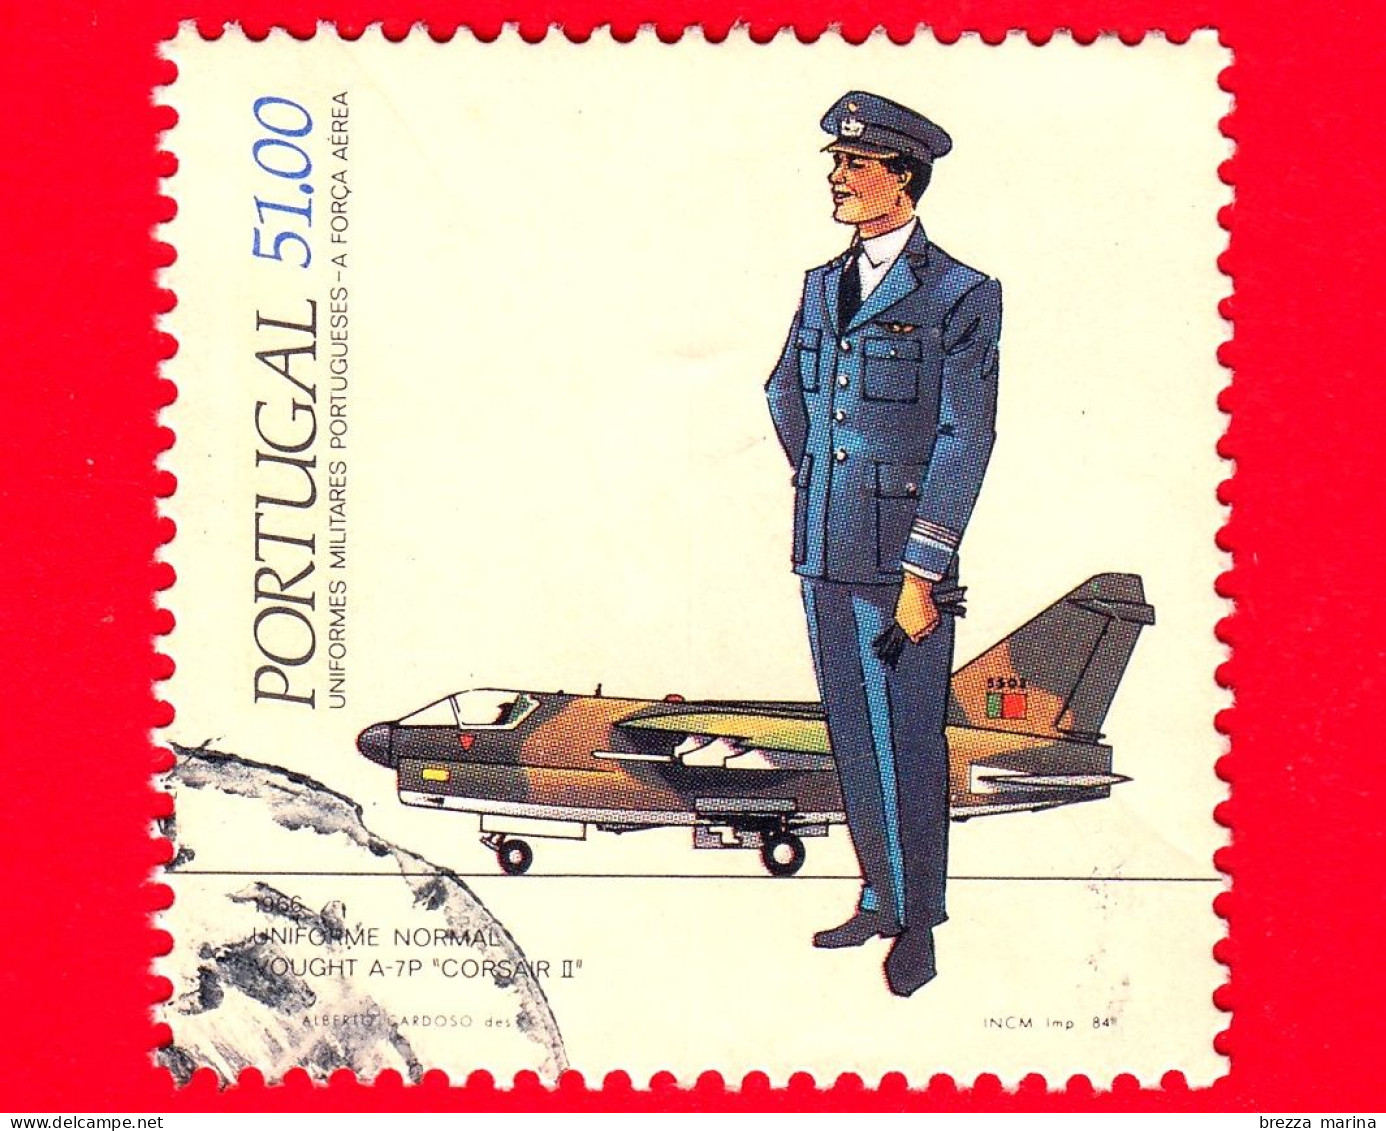 PORTOGALLO - Usato - 1984 - Uniformi Militari Portoghesi - Aeronautica - Corsair II - 51.00 - Oblitérés